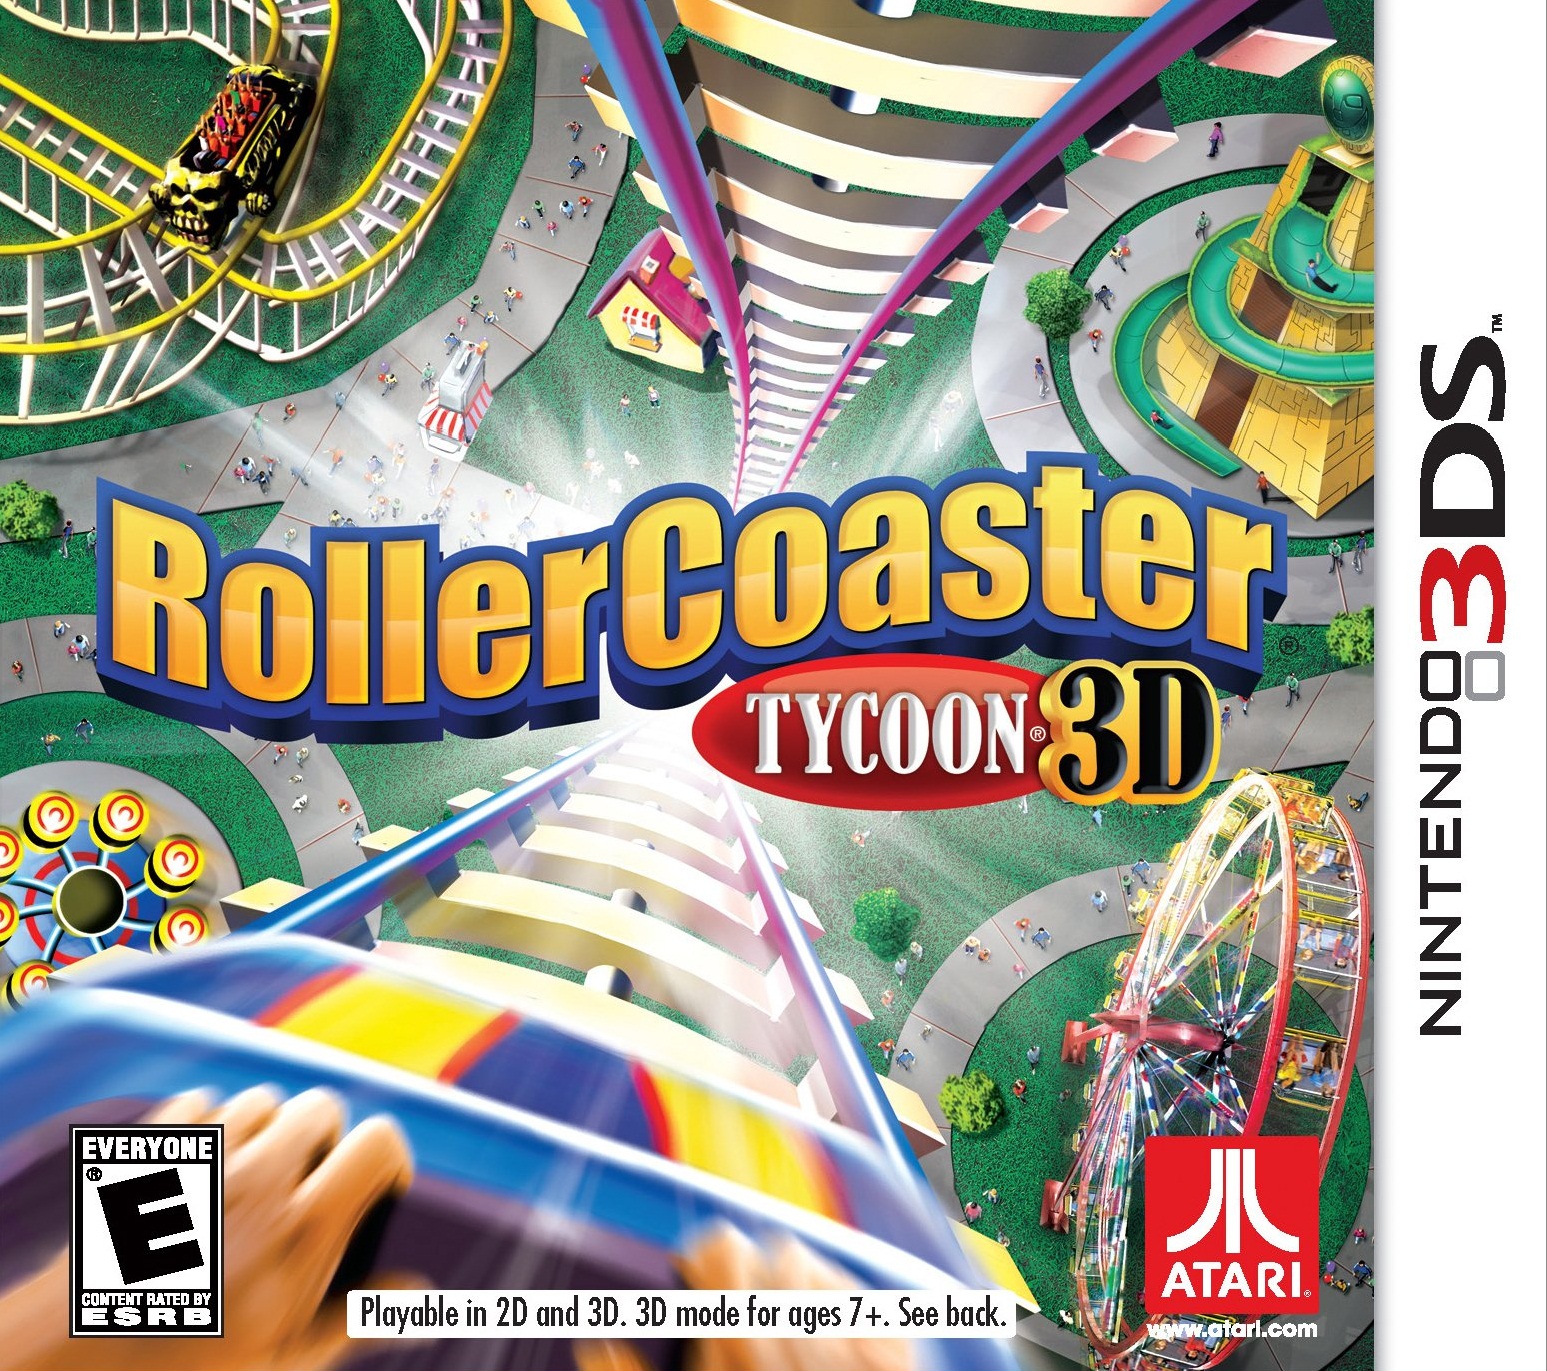 Secrets - RollerCoaster Tycoon 2 Guide - IGN